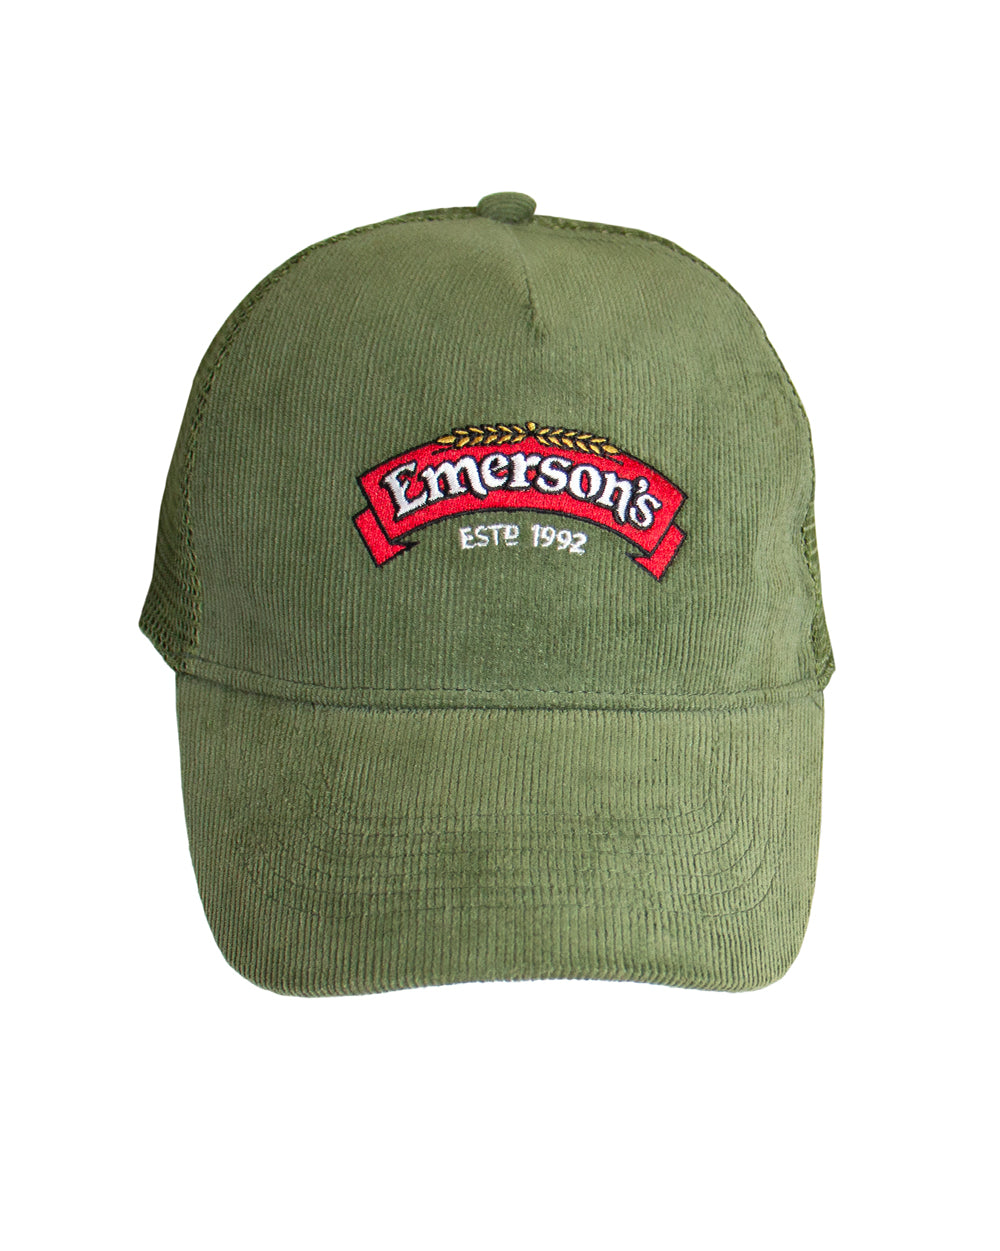 Emerson's Trucker Cap -  Beer Gear Apparel & Merchandise - Speights - Lion Red - VB - Tokyo Dy merch